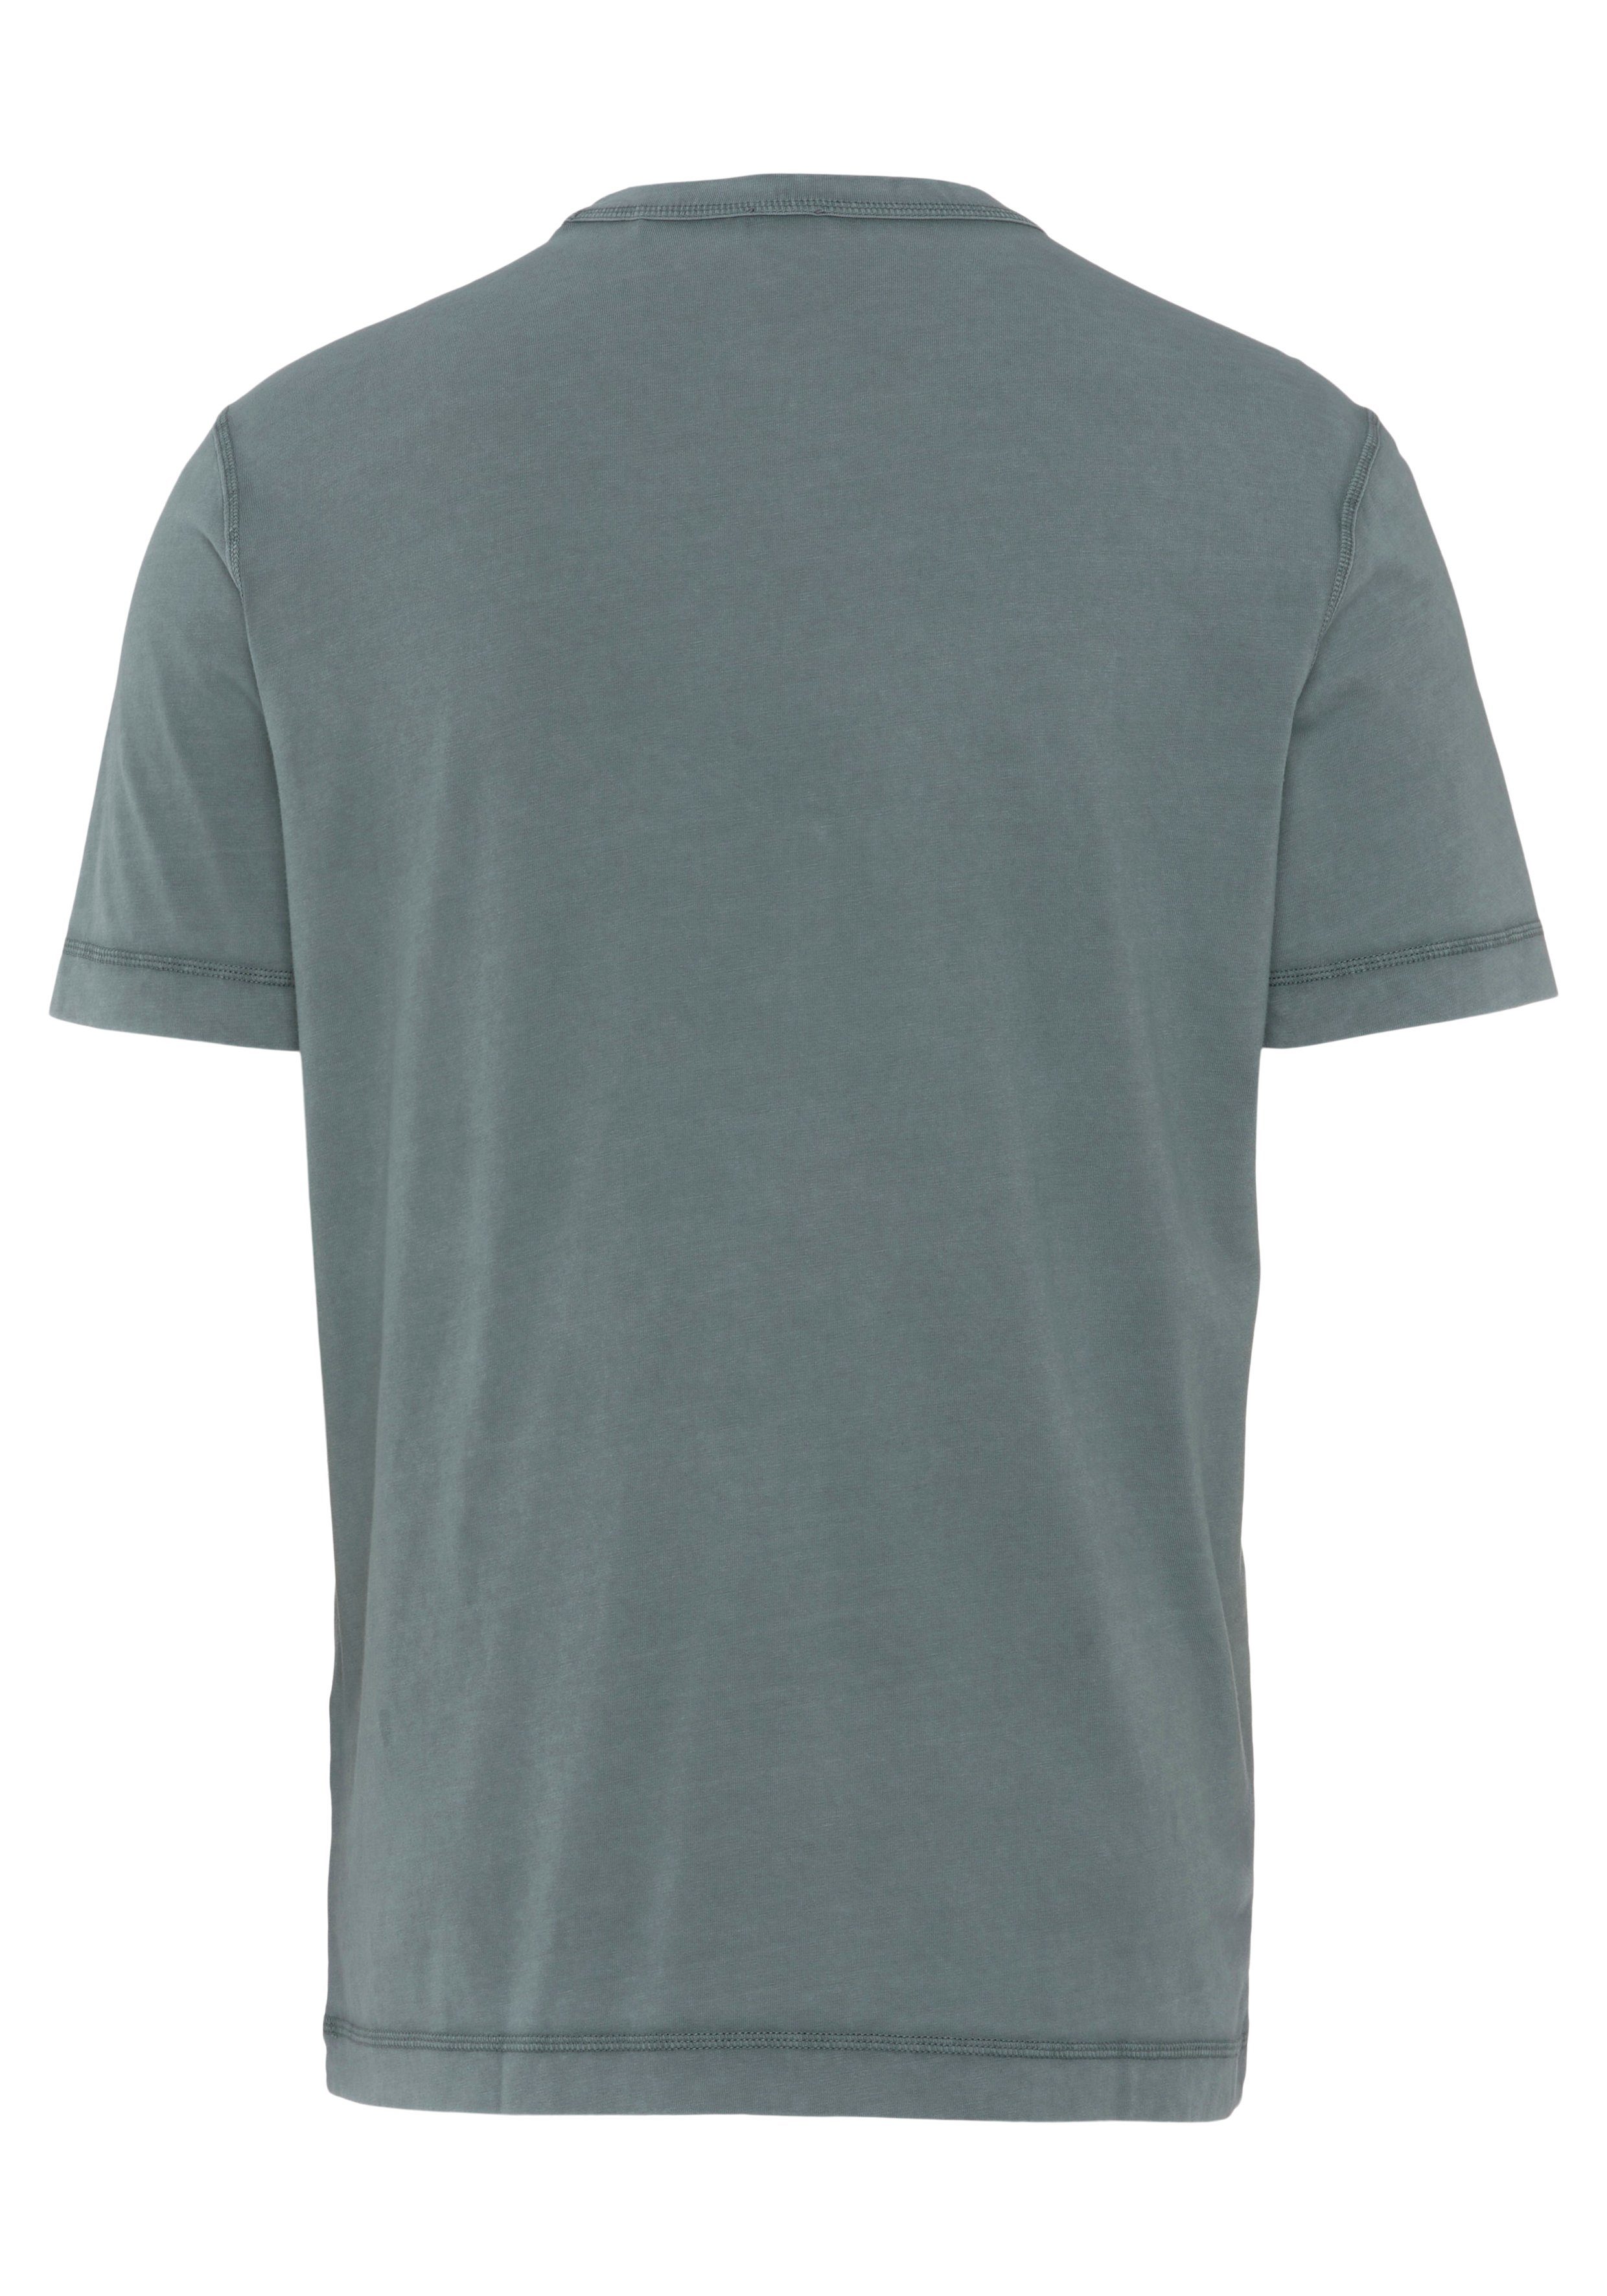 Open BOSS BOSS ORANGE mit T-Shirt Tokks ORANGE Markenlabel Green375